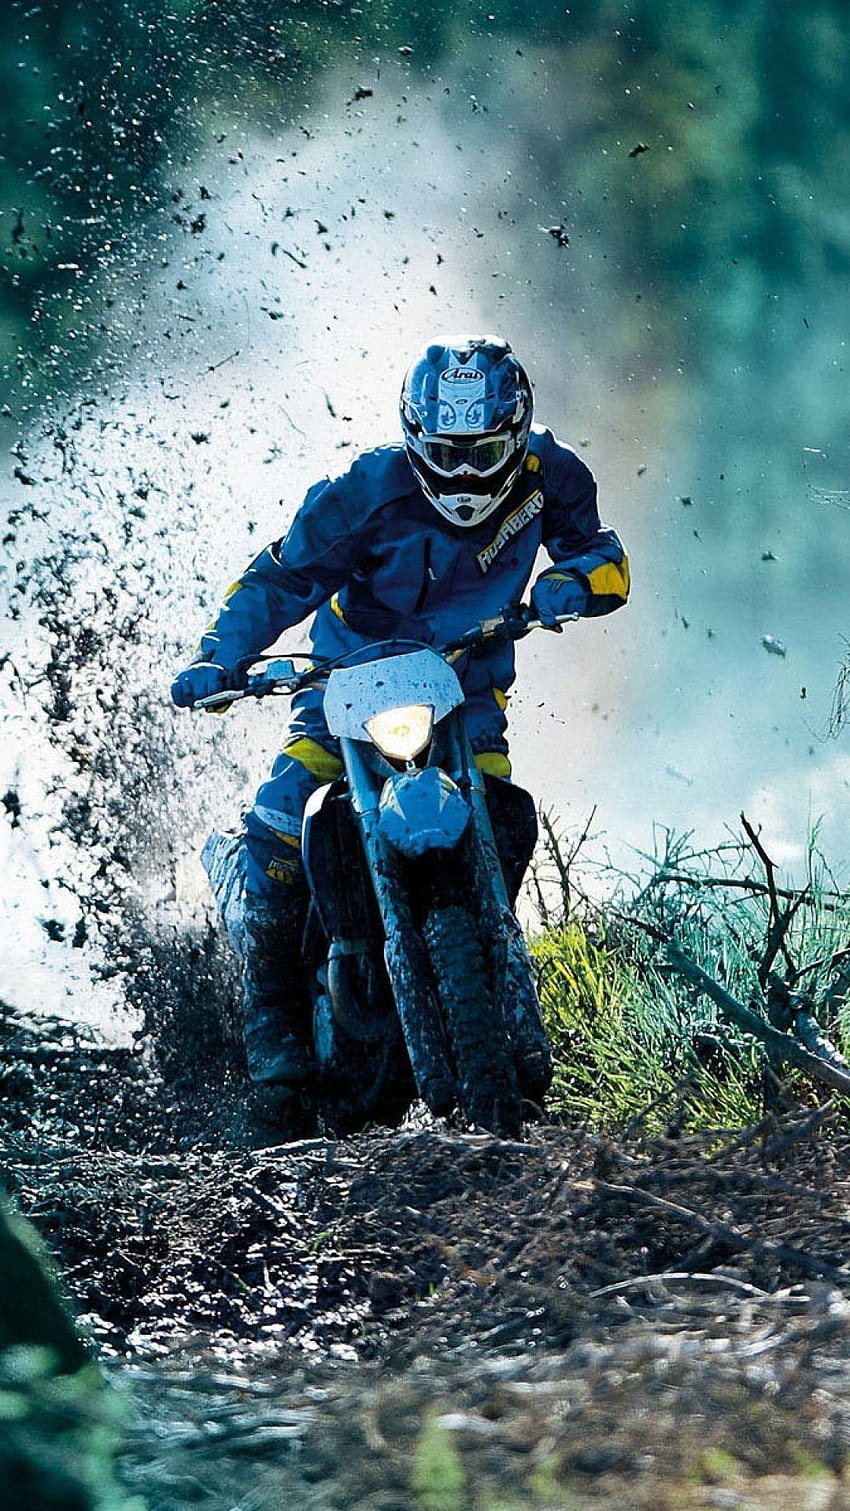 Prędkość . Enduro motocross, wyścigi Dirt bike, Enduro Tapeta na telefon HD